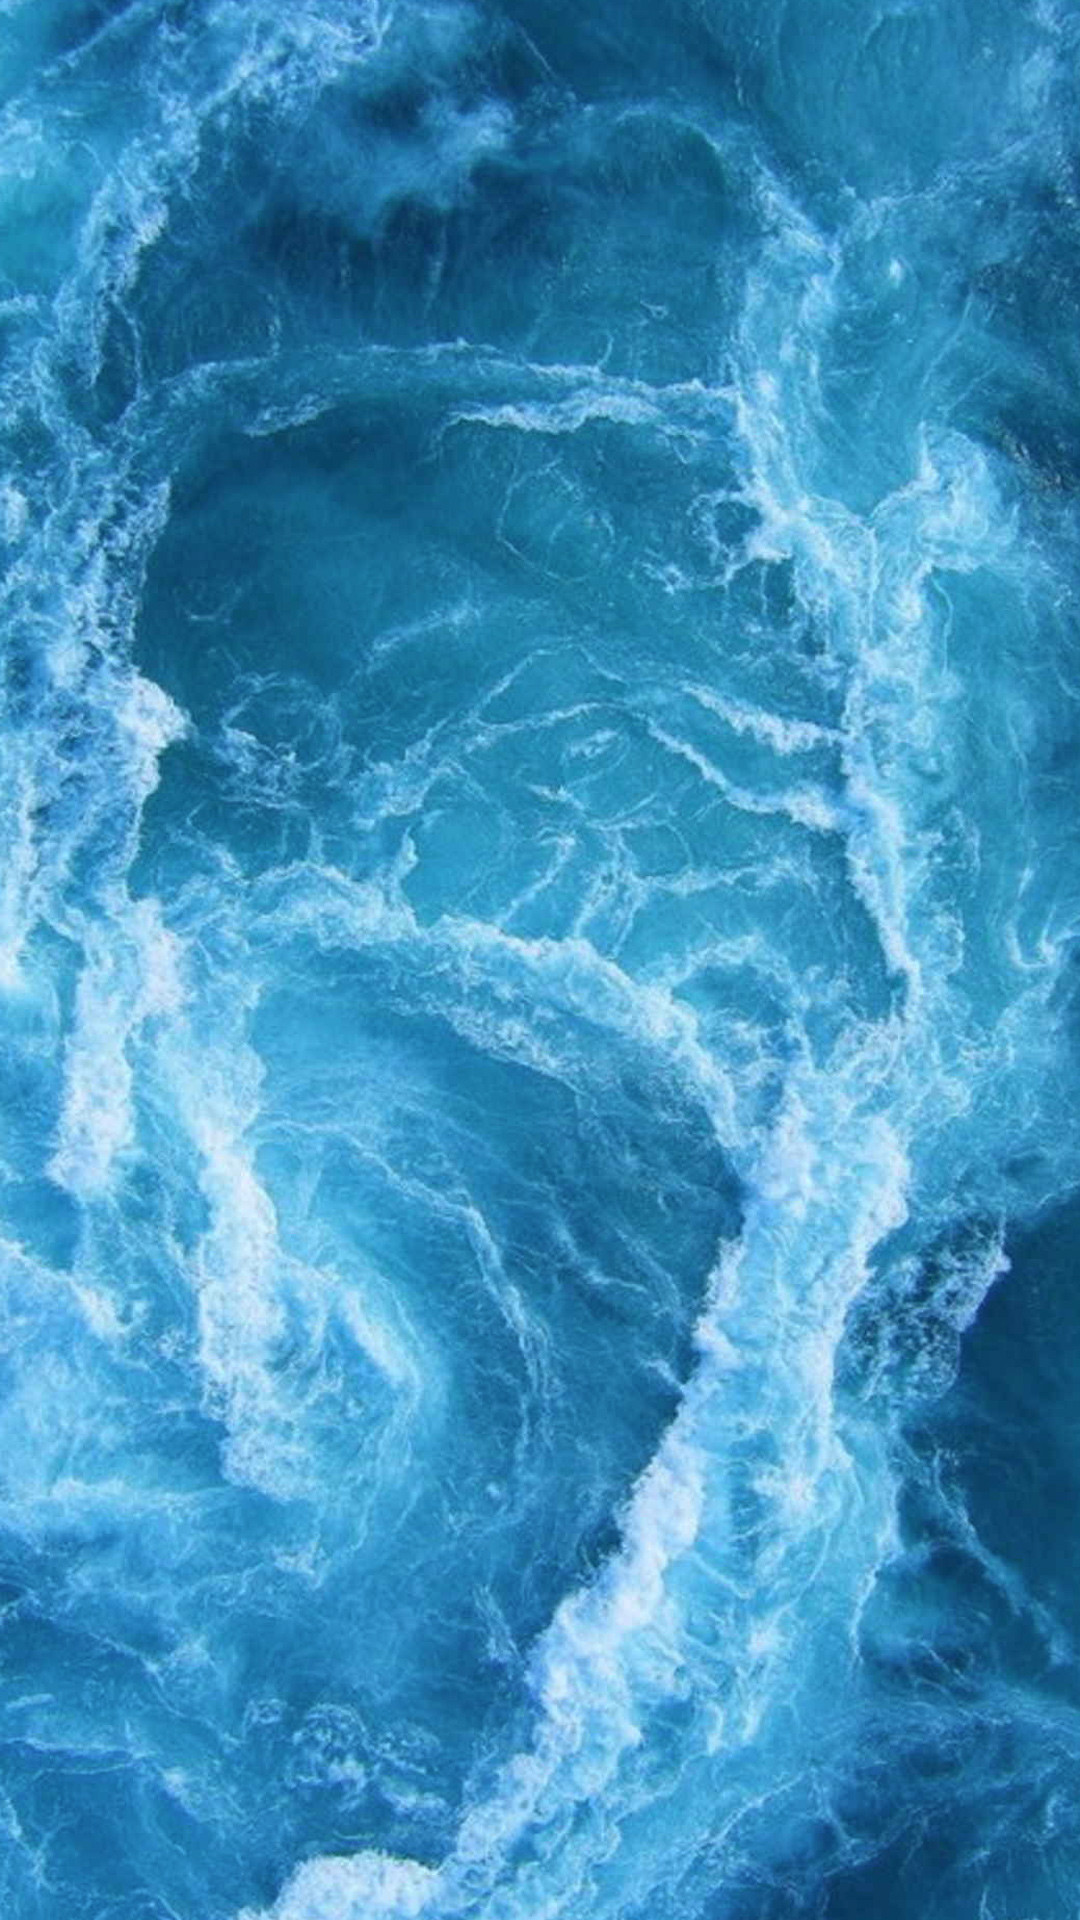 Swirling Blue Ocean Waves iPhone 6 HD Wallpaper